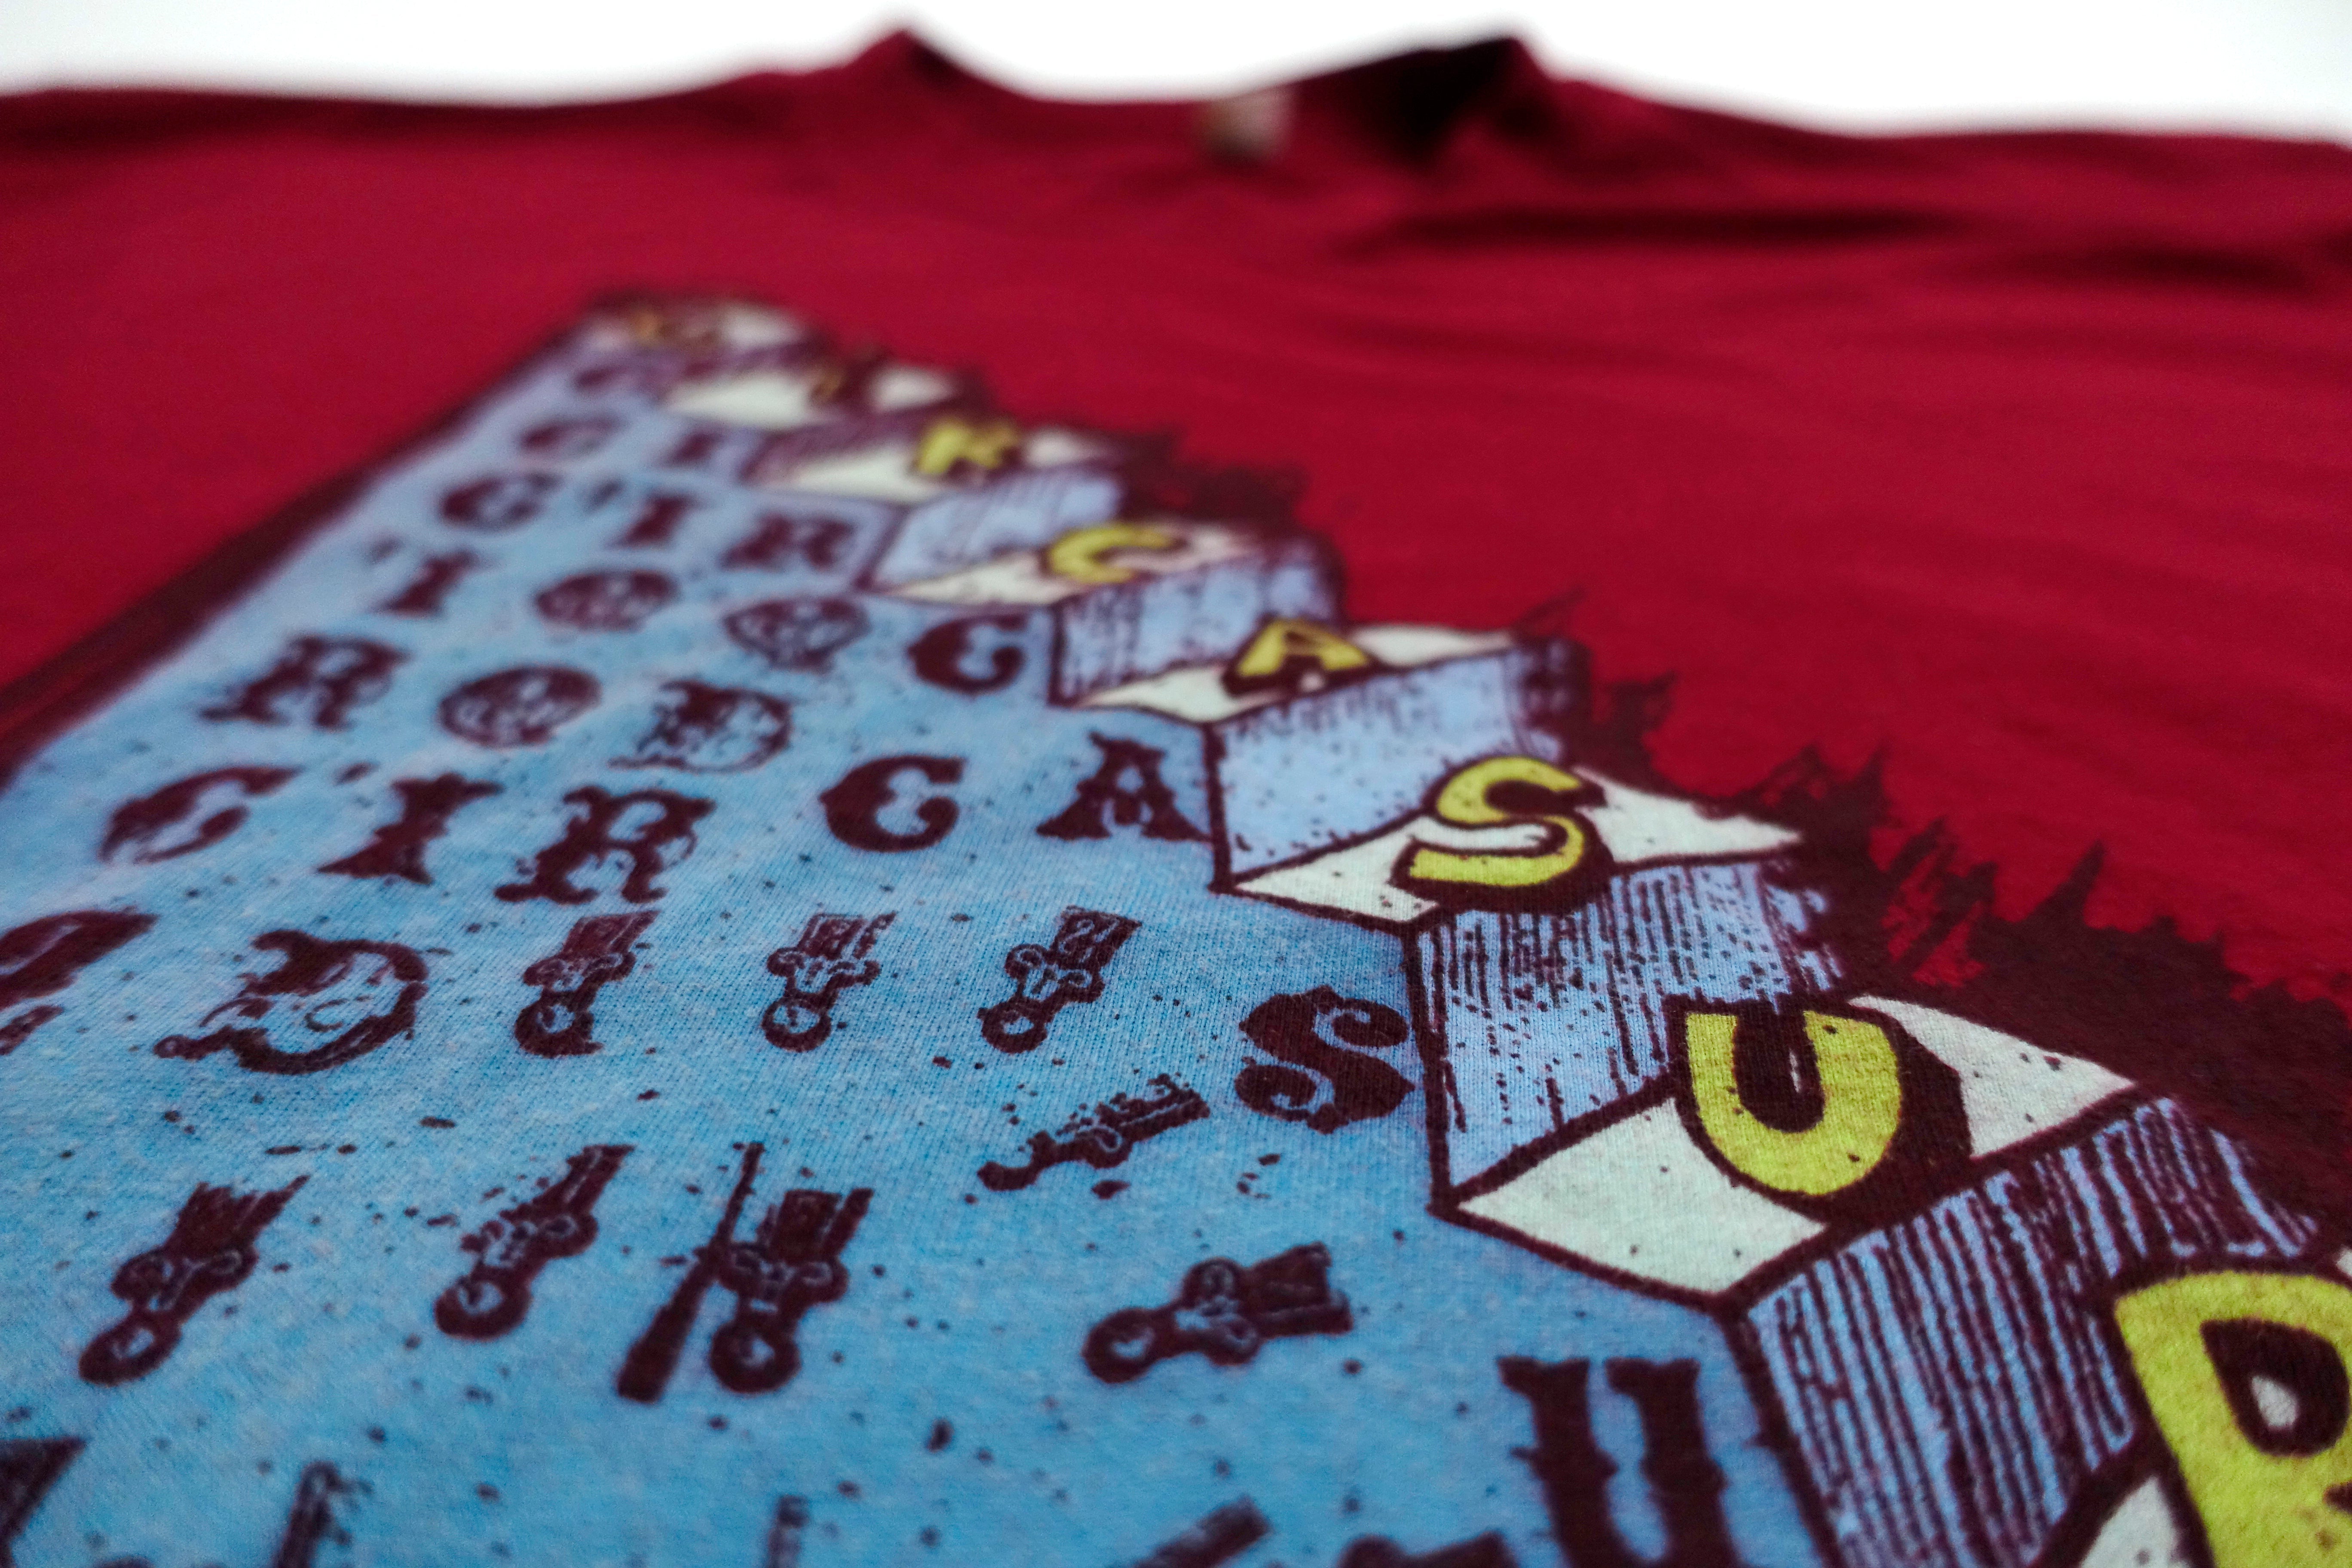 Circa Survive - Staircase Letters Tour Shirt Size XL